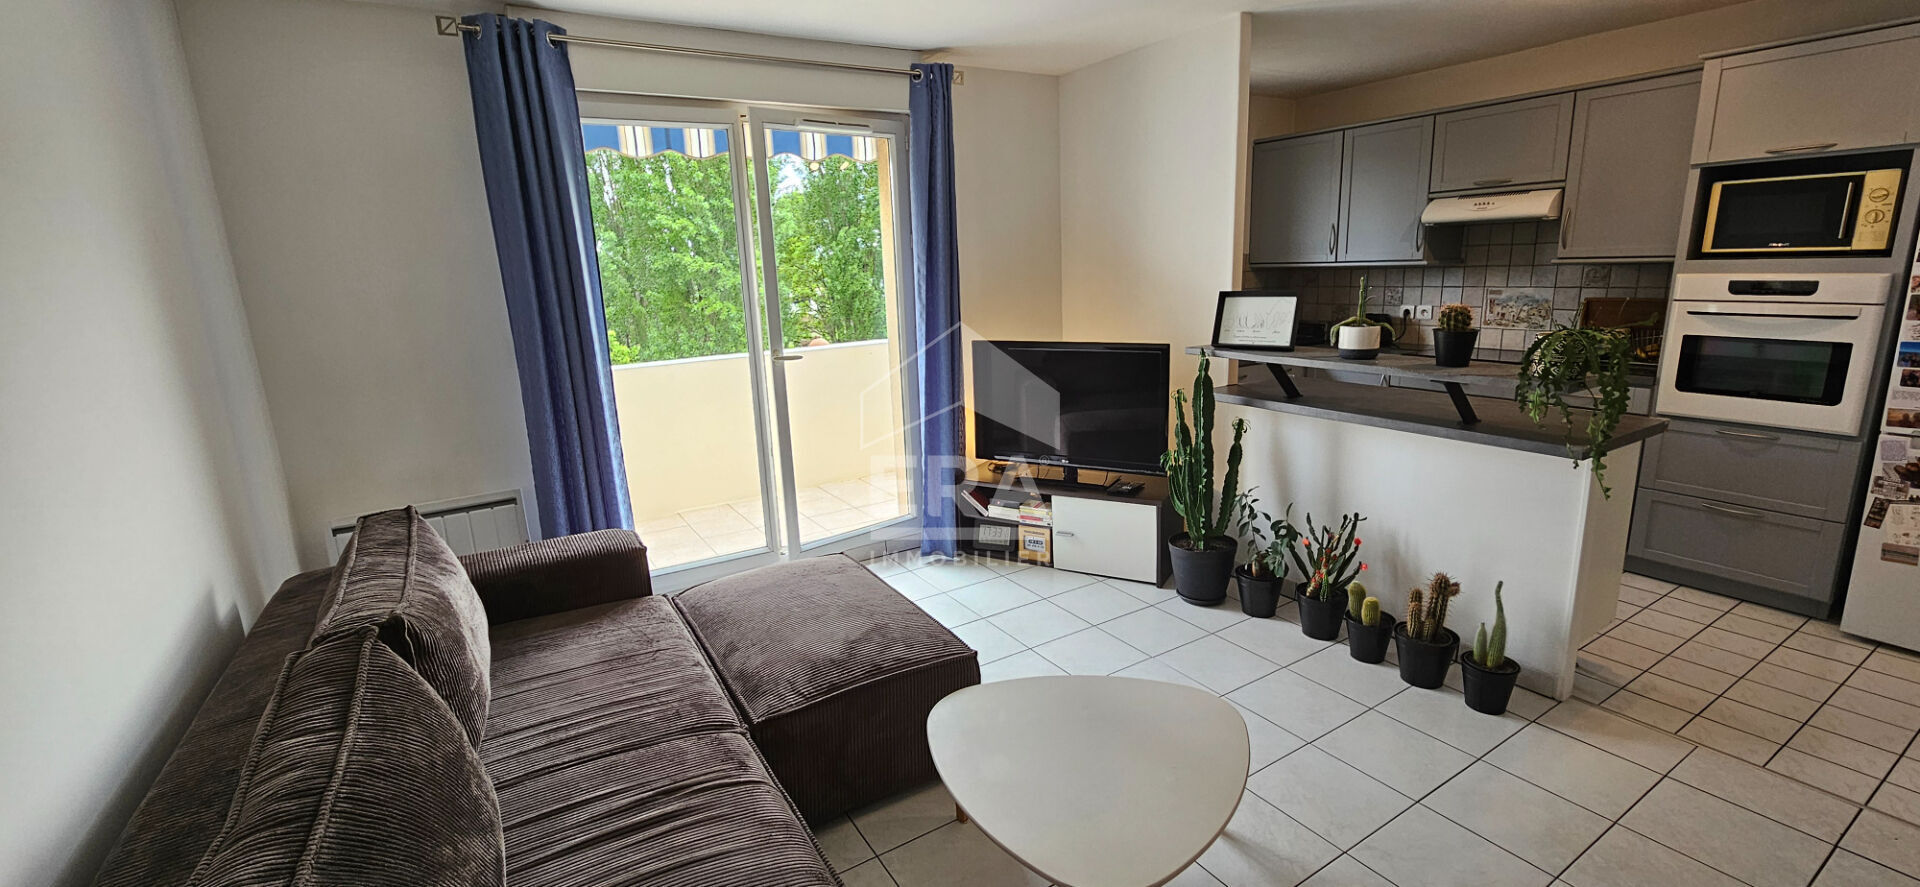 Appartement 4 pièces 81 m² Neuilly-sur-Marne